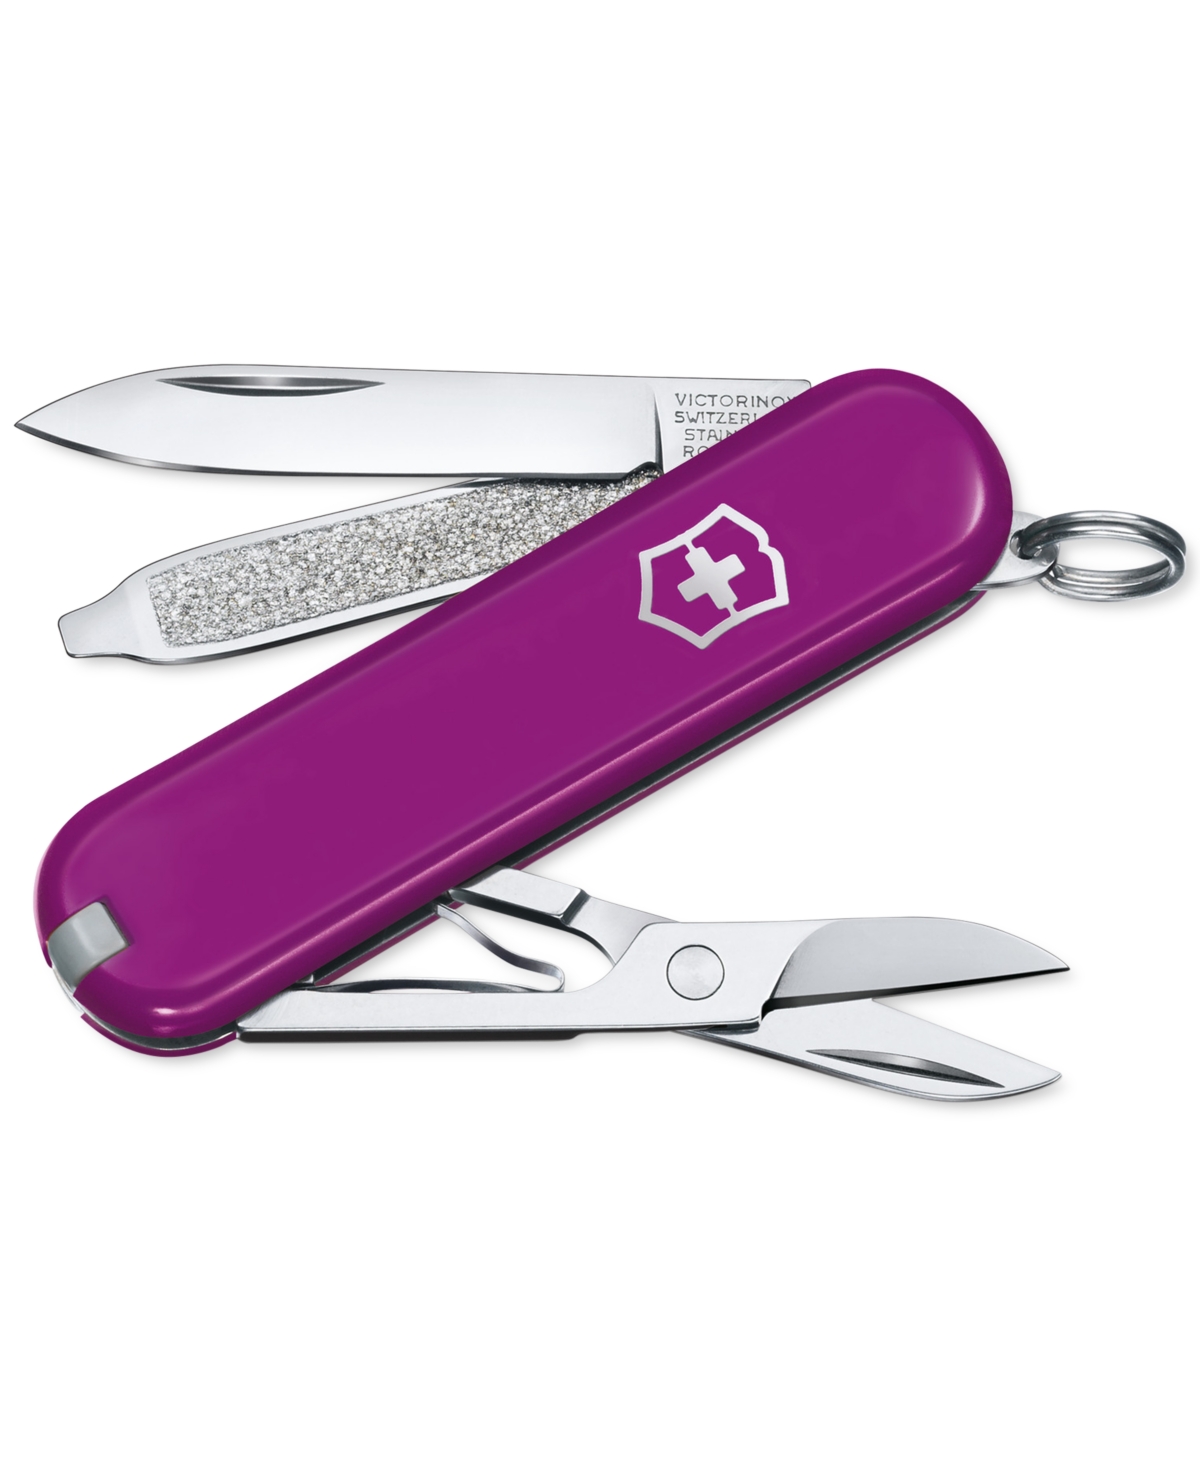 Victorinox Swiss Army Classic Sd Pocketknife, Tasty Grape In Purple